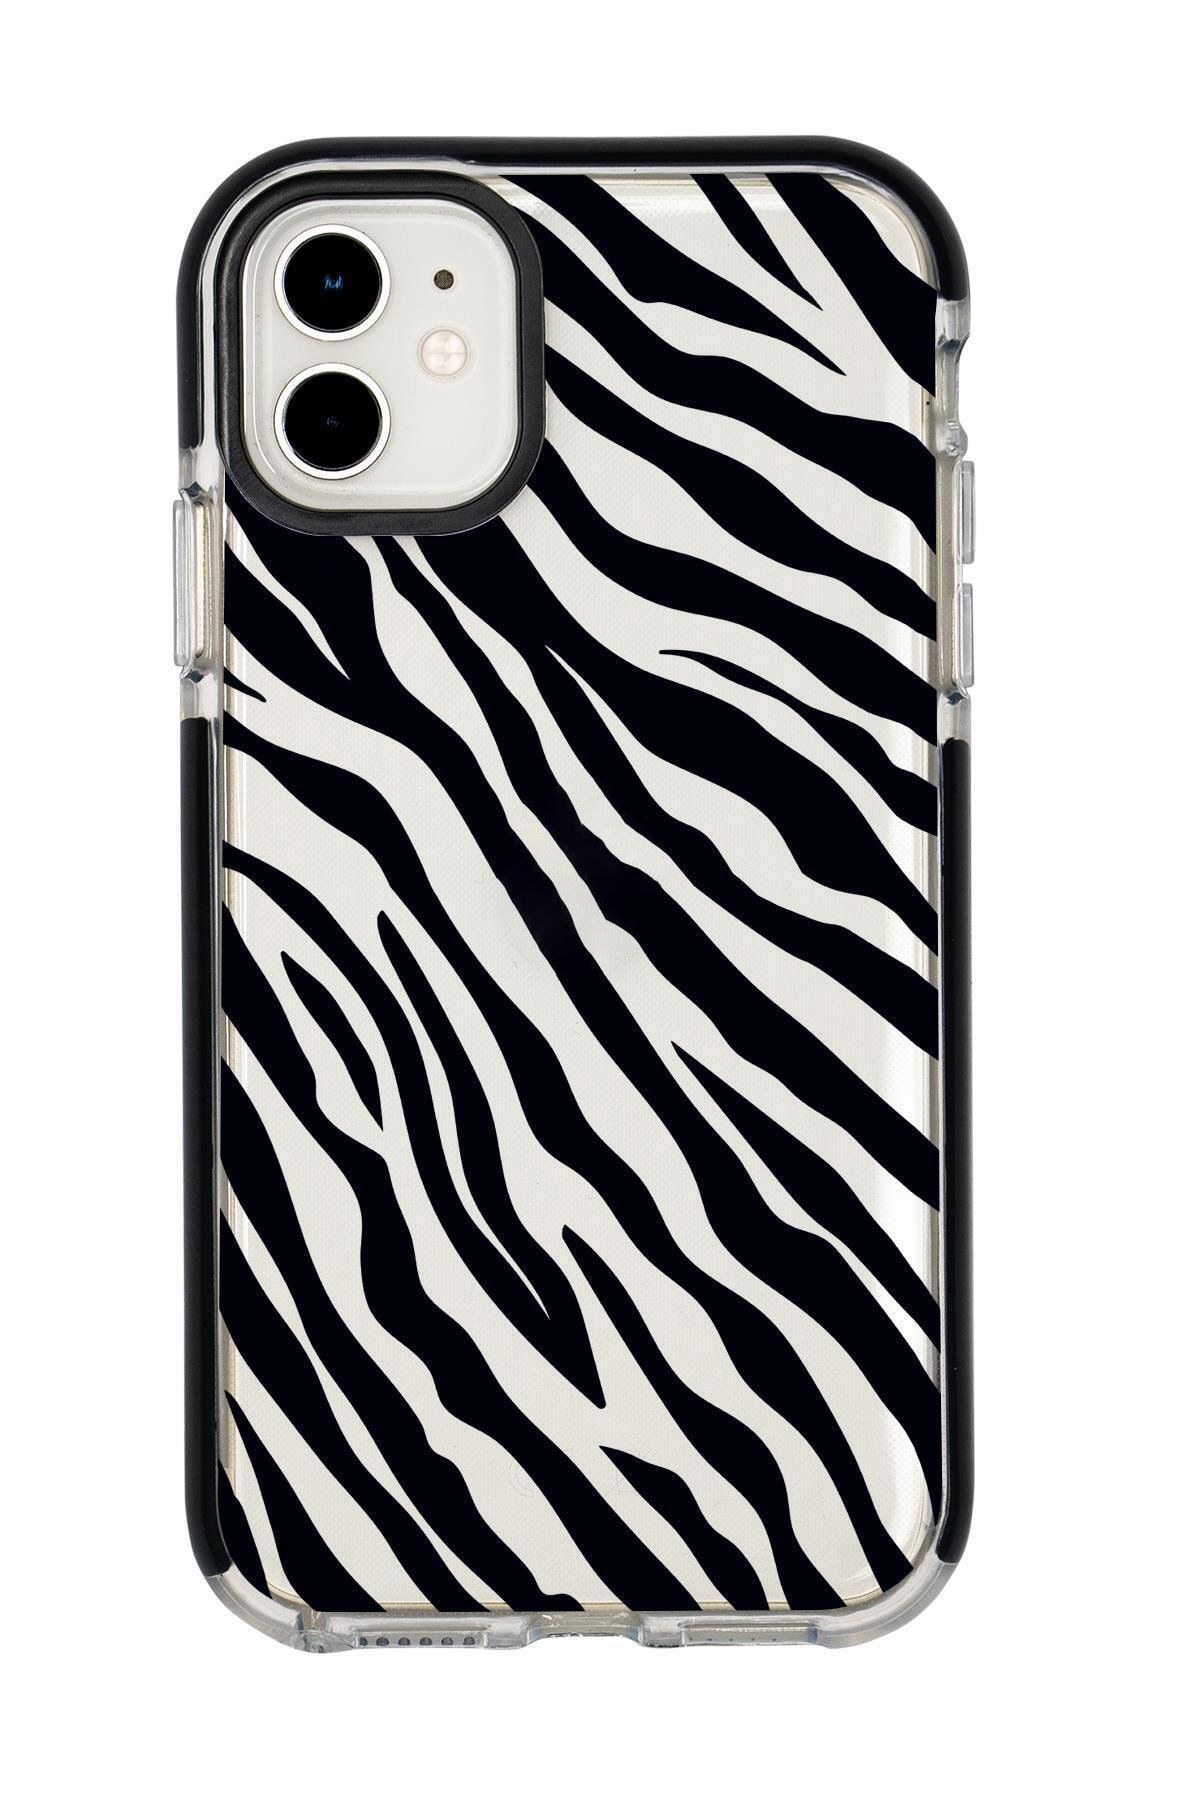 mooodcase Iphone 11 Zebra Pattern Candy Bumper Silikonlu Telefon Kılıfı